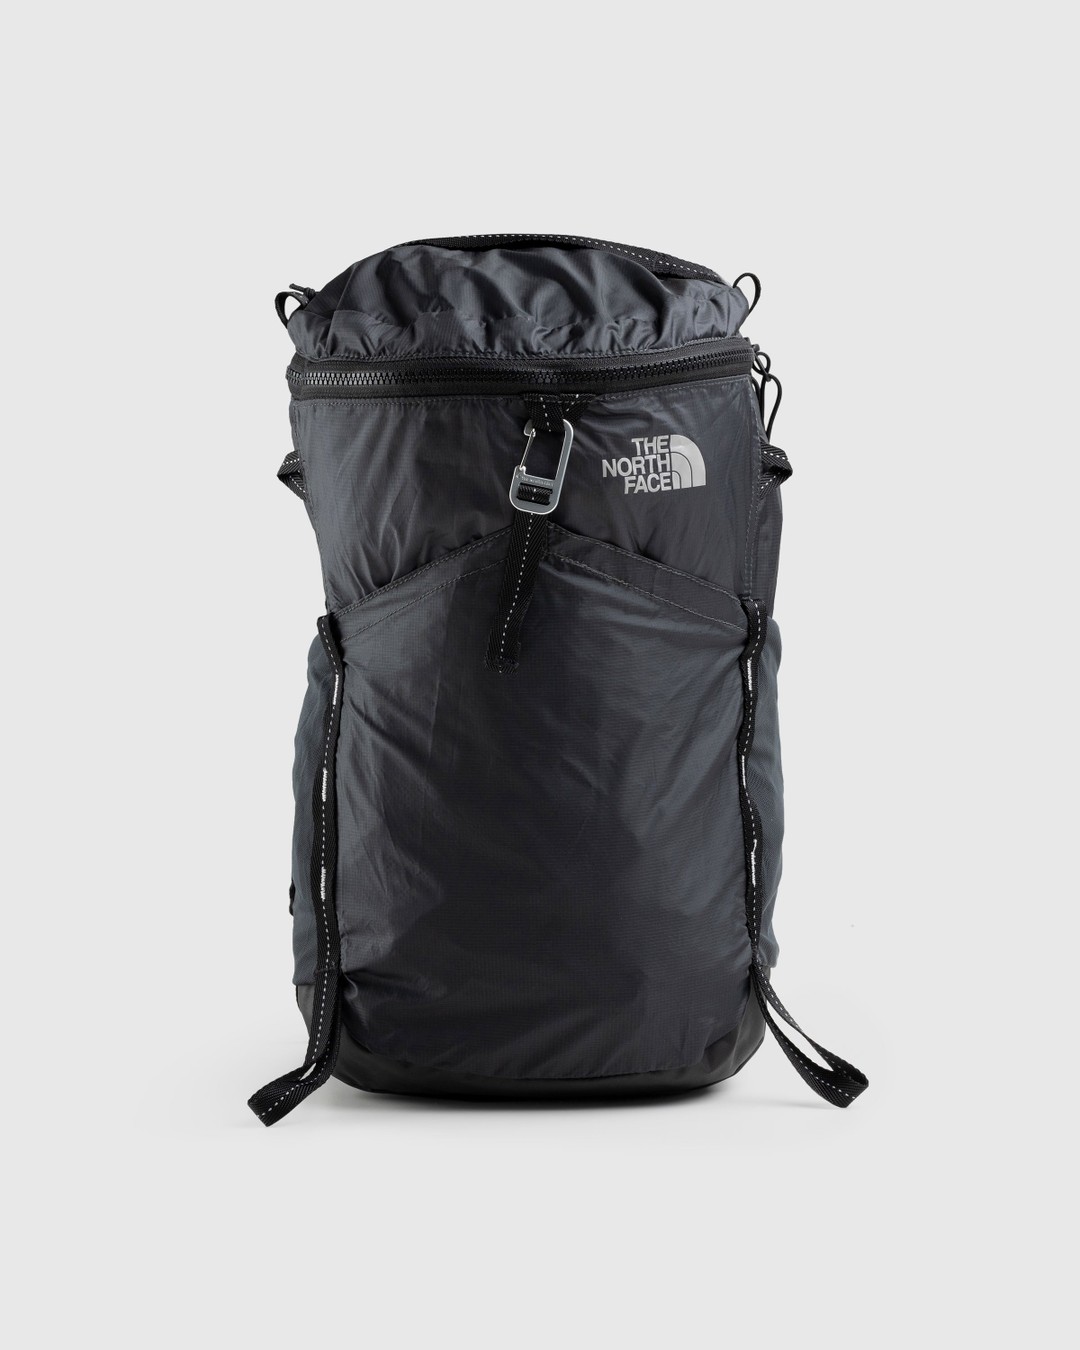 The North Face – Flyweight Daypack Asphalt Grey/TNF Black - Bags - Grey - Image 1